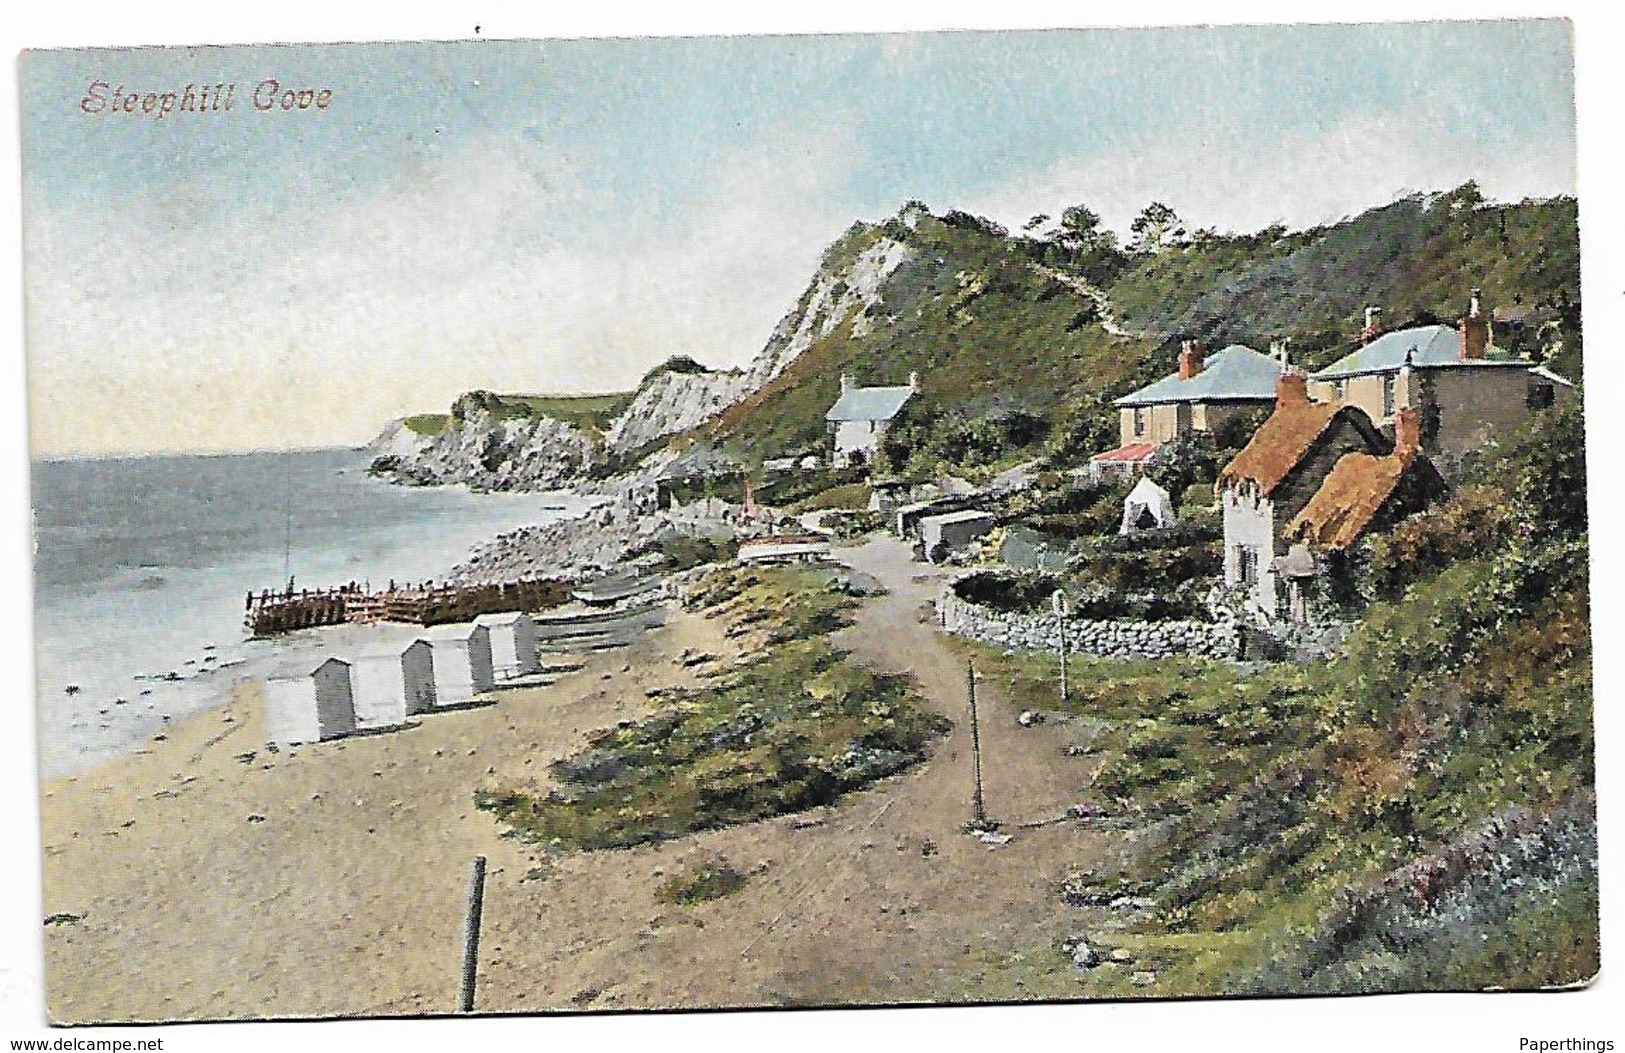 Early Colour Postcard, Steephill Cove, Coastal Seaside Scene, Beach Huts, Houses. 1905. - Ventnor